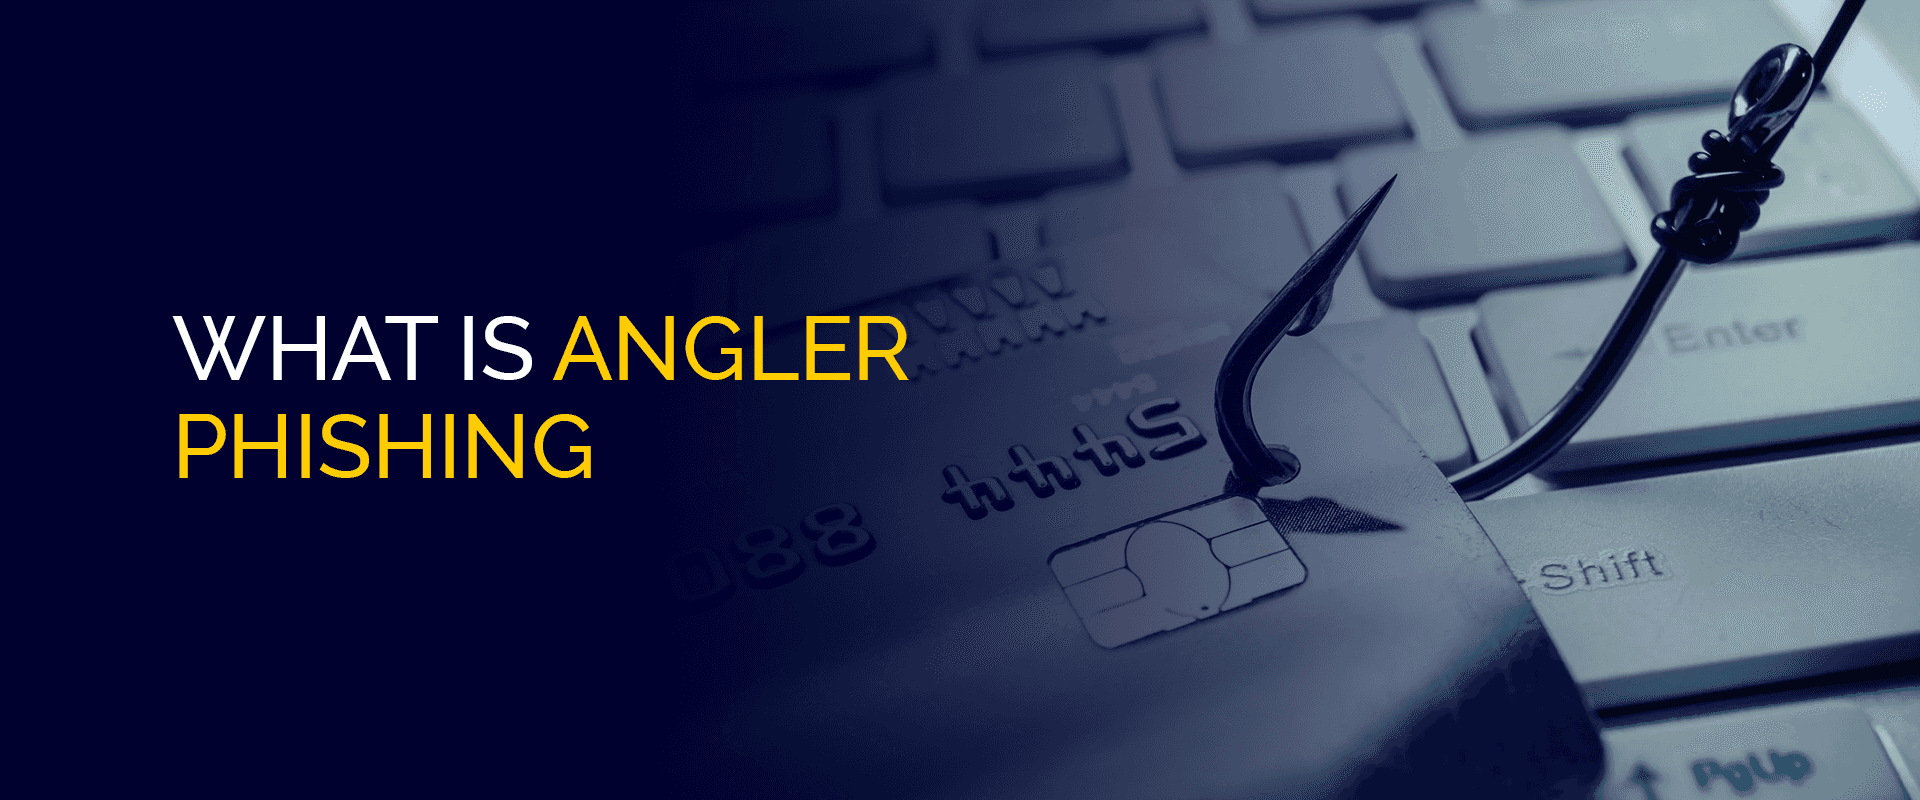 What is Angler Phishing